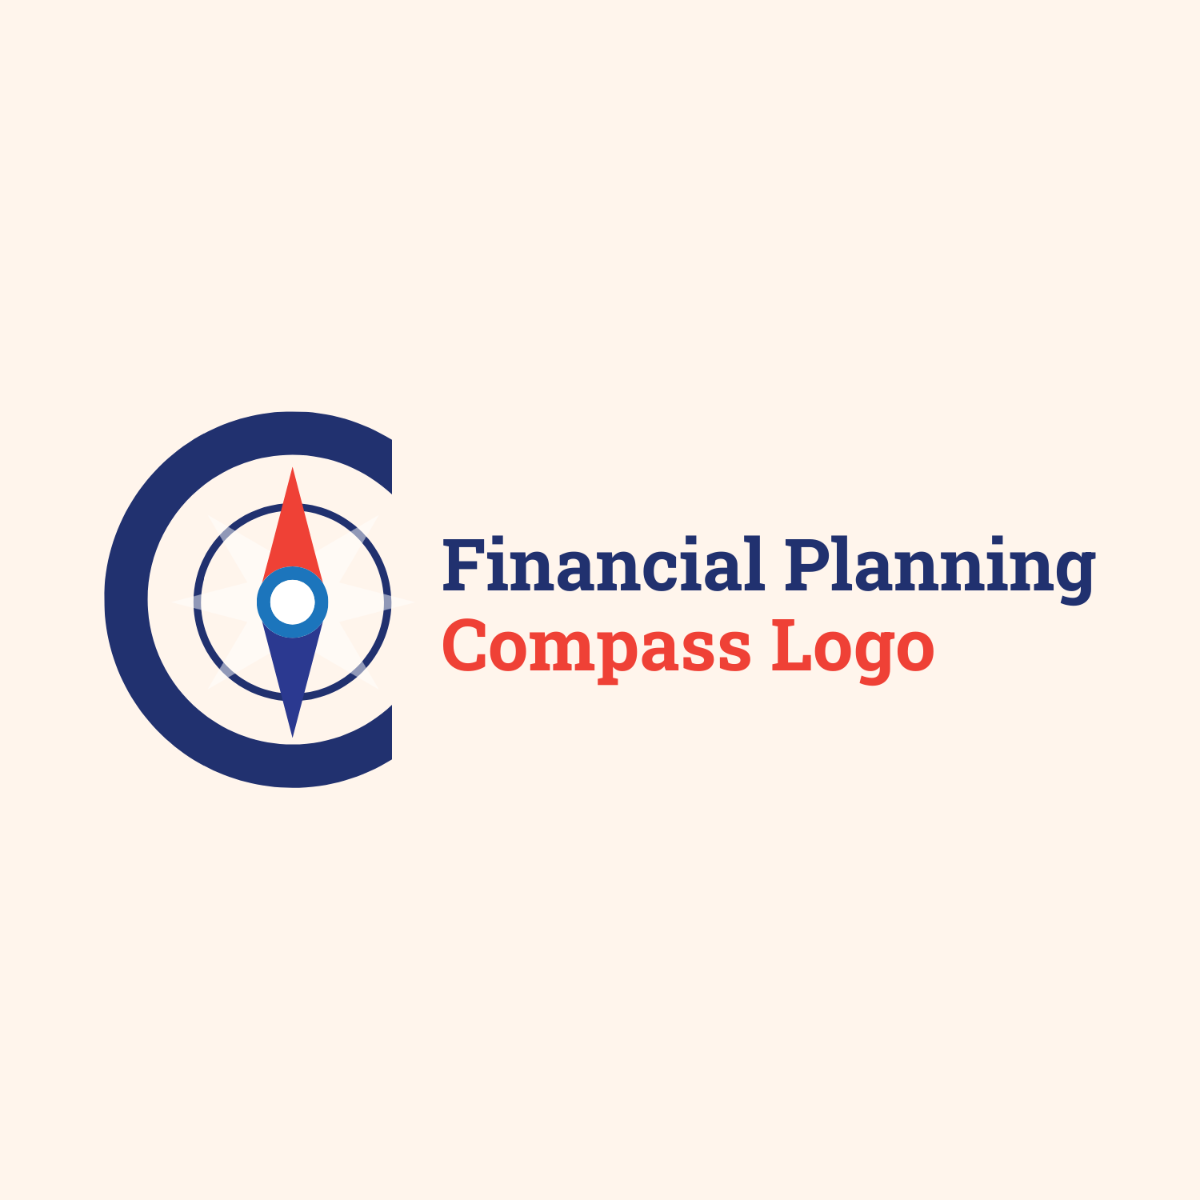 Financial Planning Compass Logo